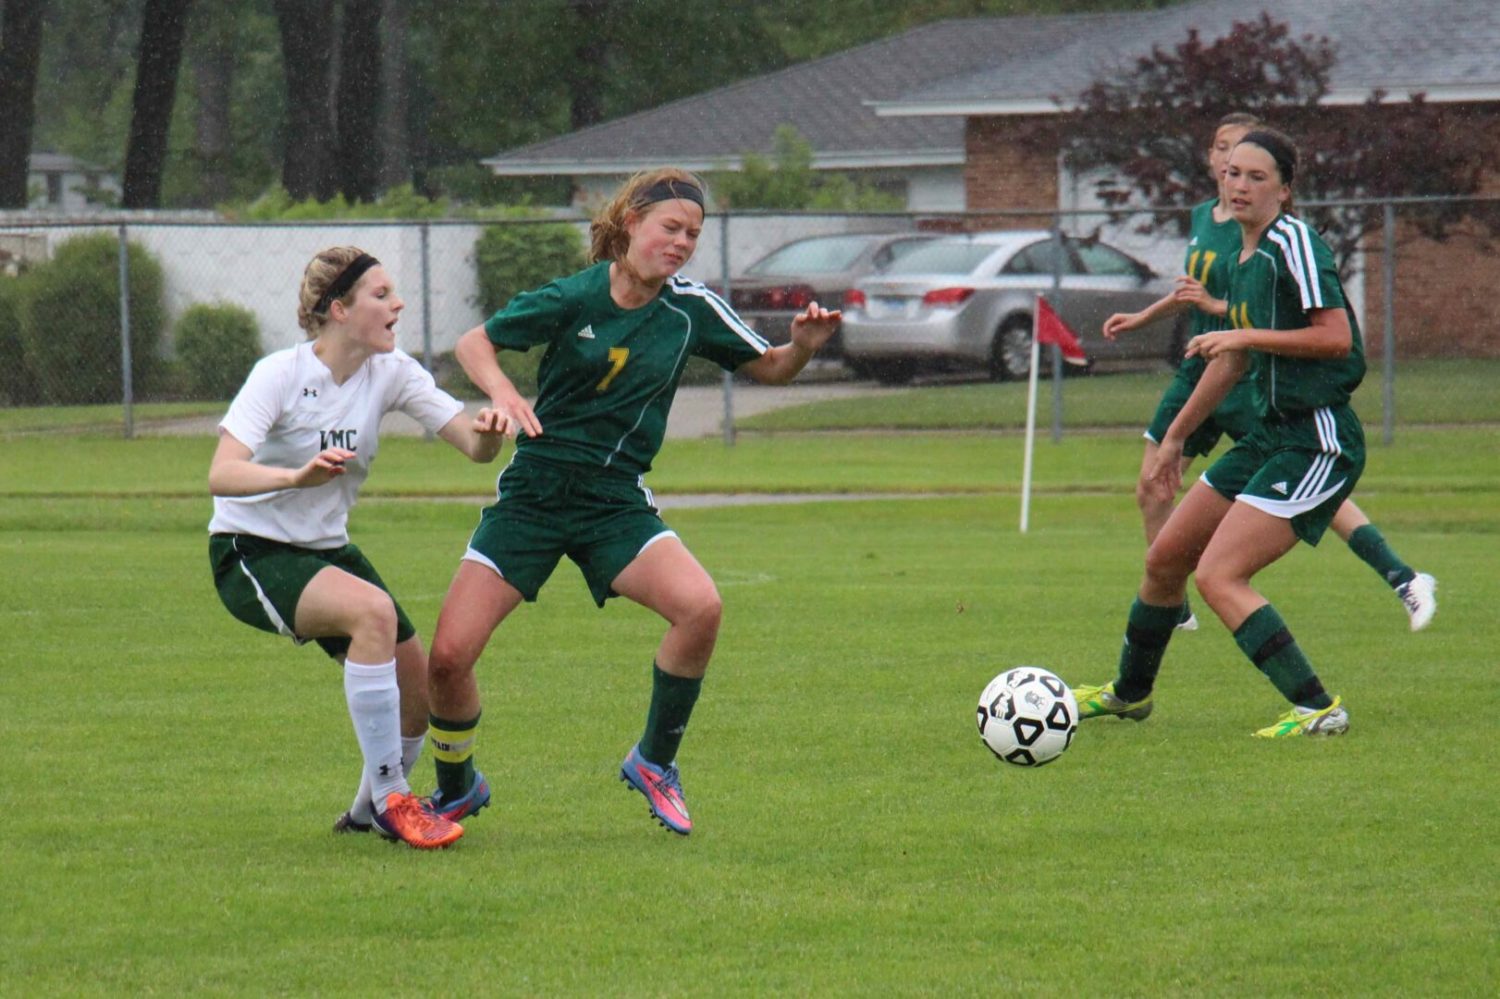 Riksen’s three goals propel WM Christian past MCC in Division 4 girls soccer finals